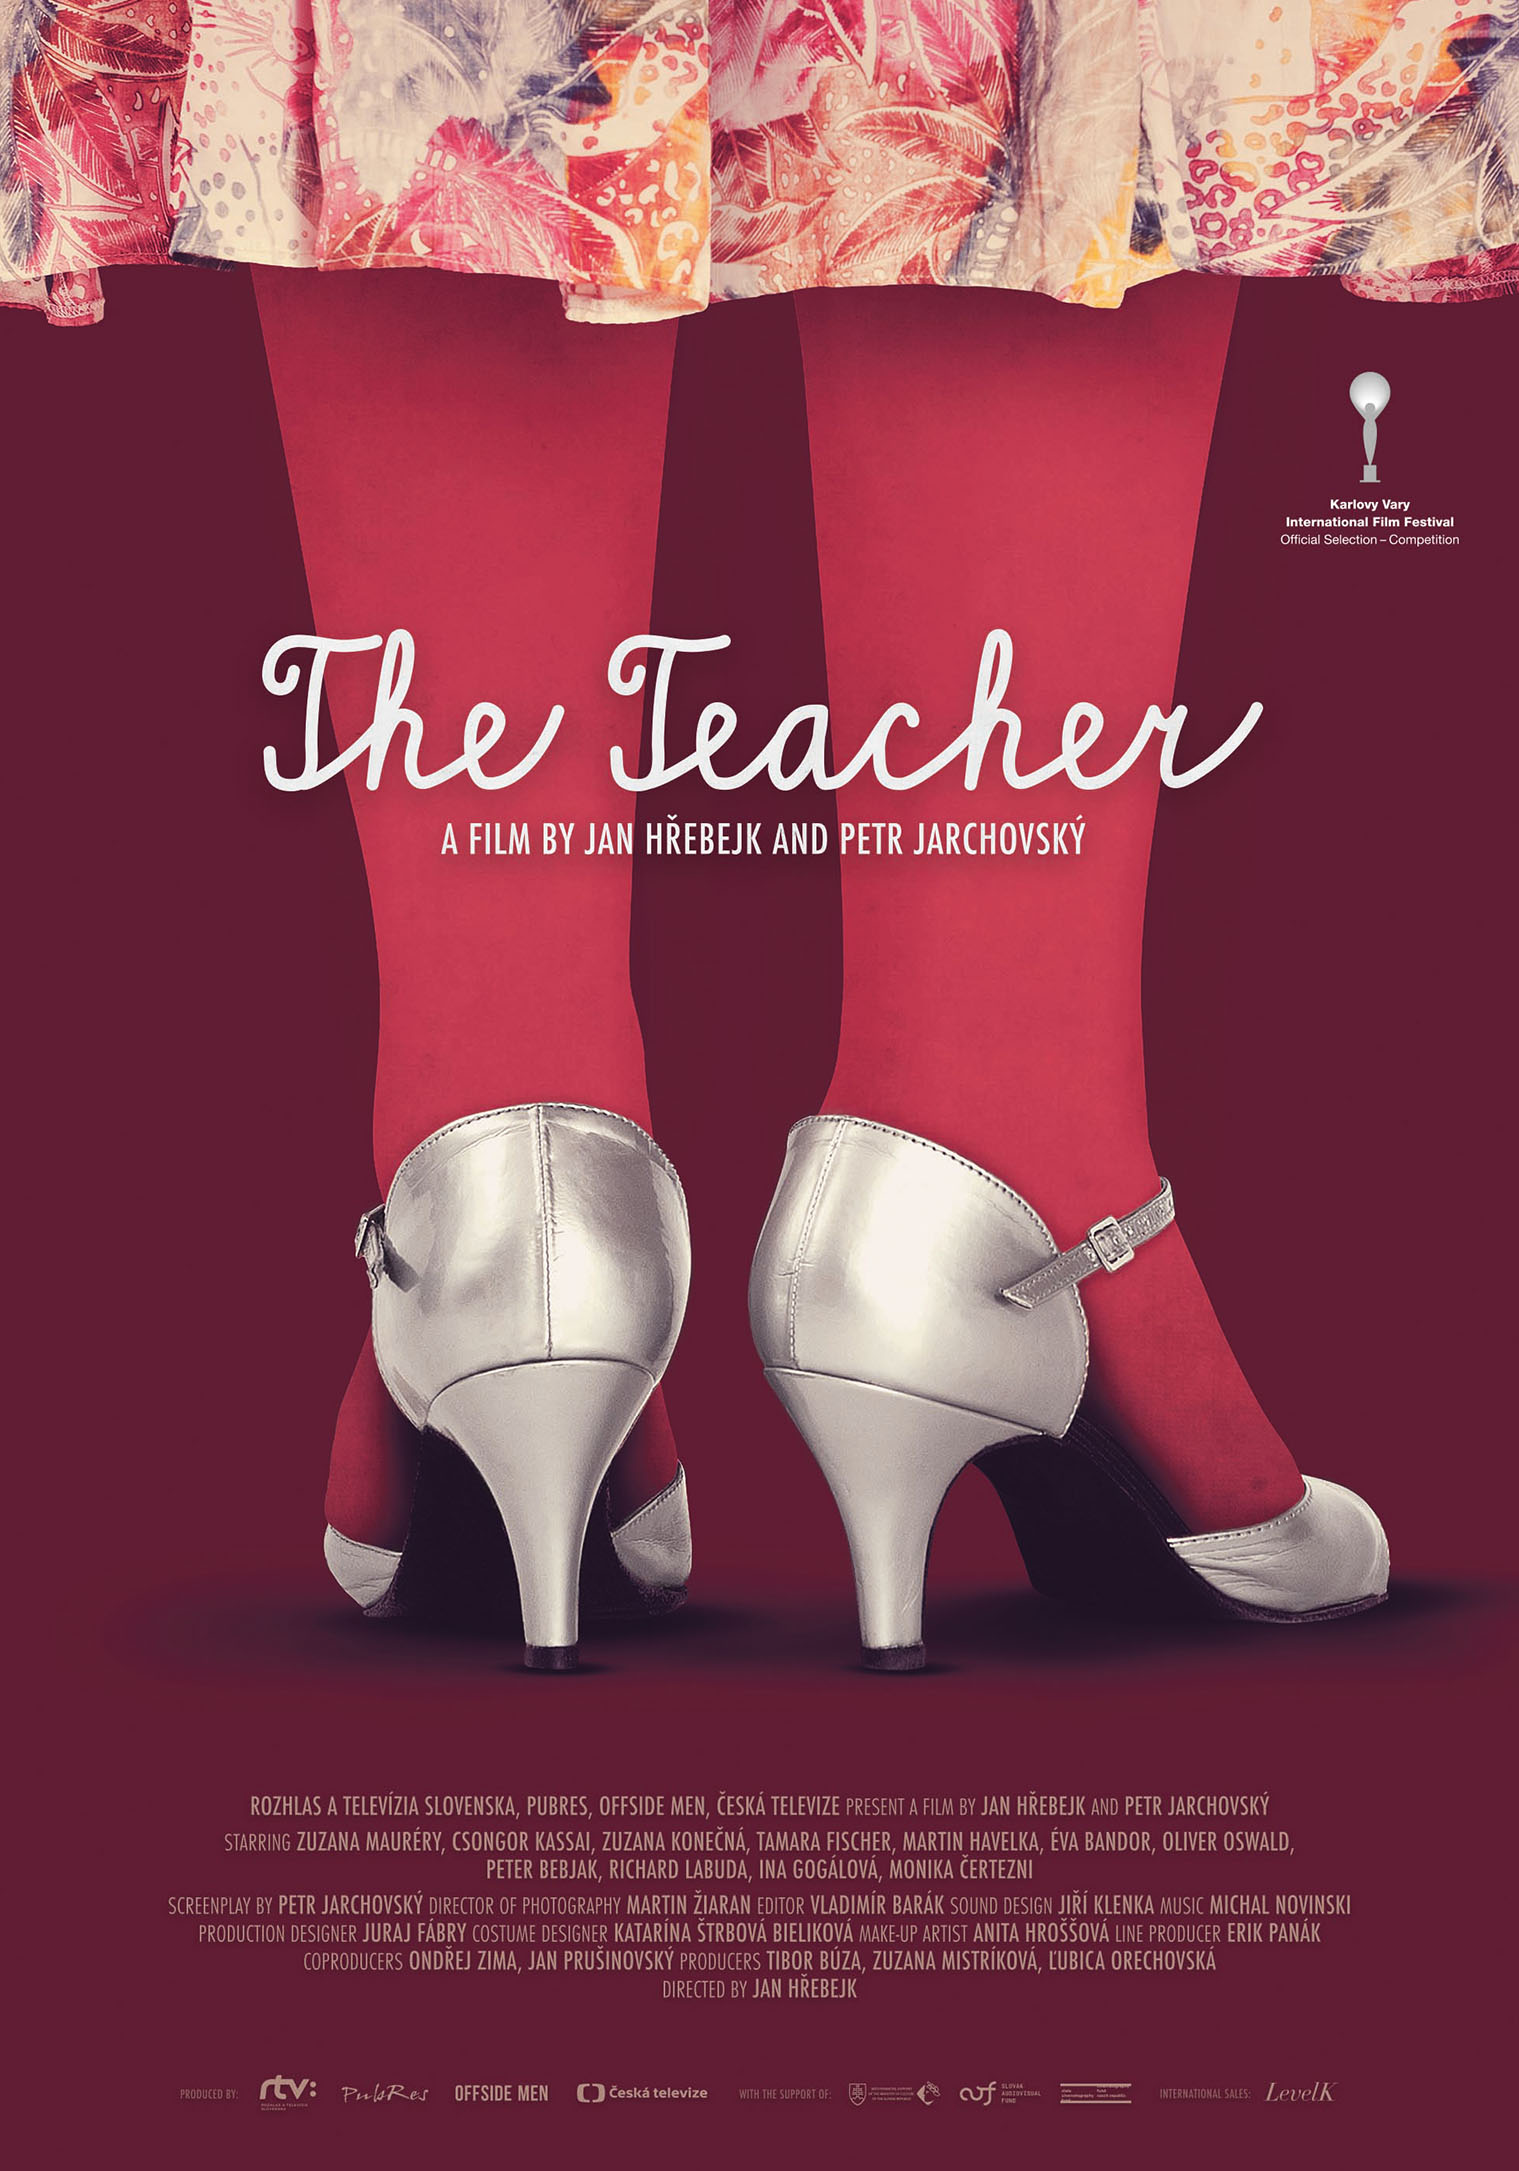 THE TEACHER  (Czech Republic | Slovakia)